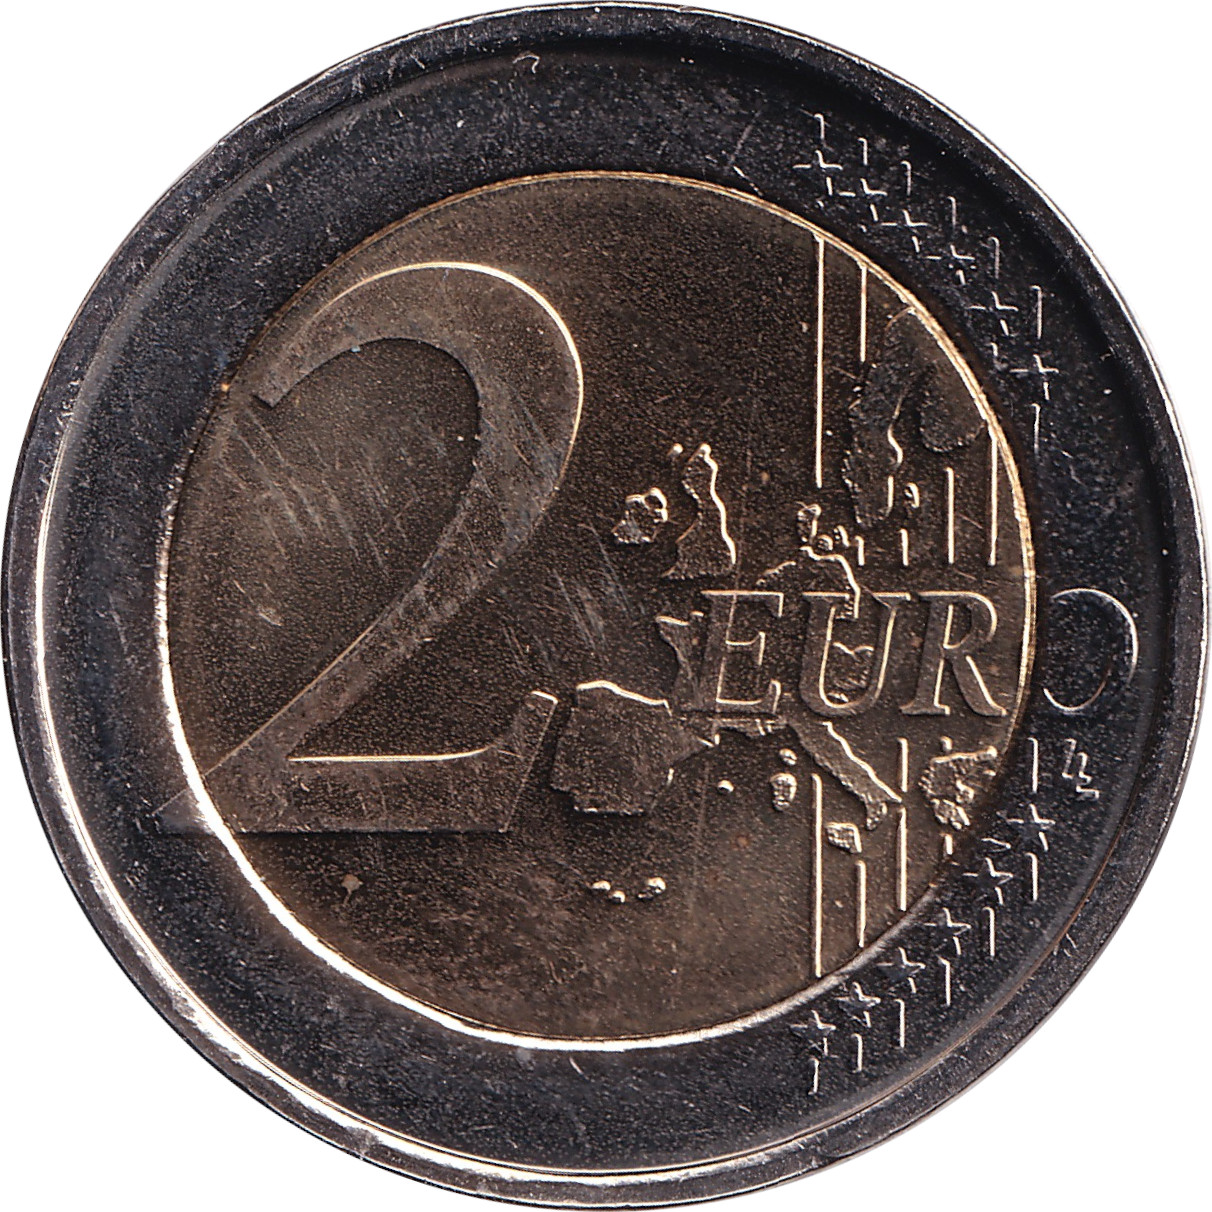 2 euro - Sceau Royal